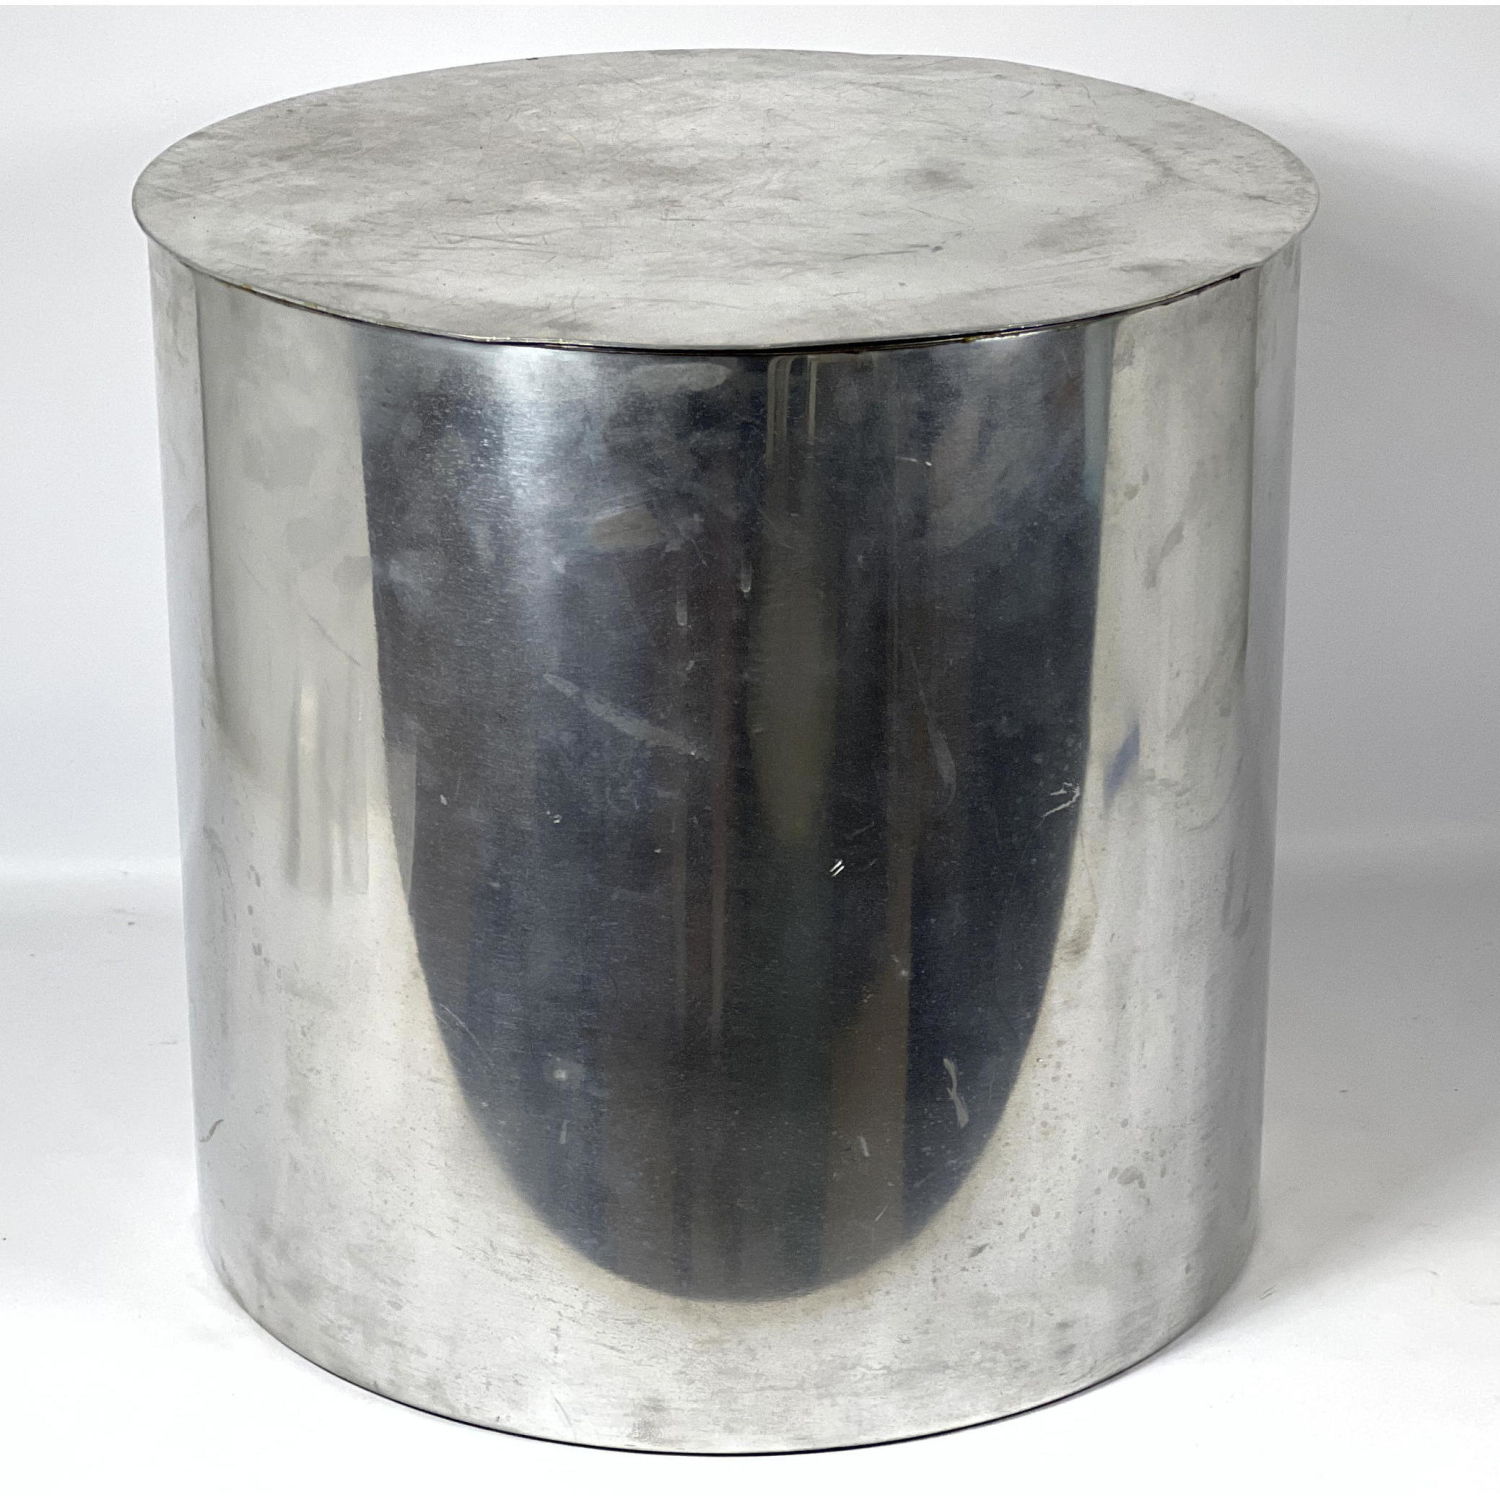 Aluminum cylindrical side table.